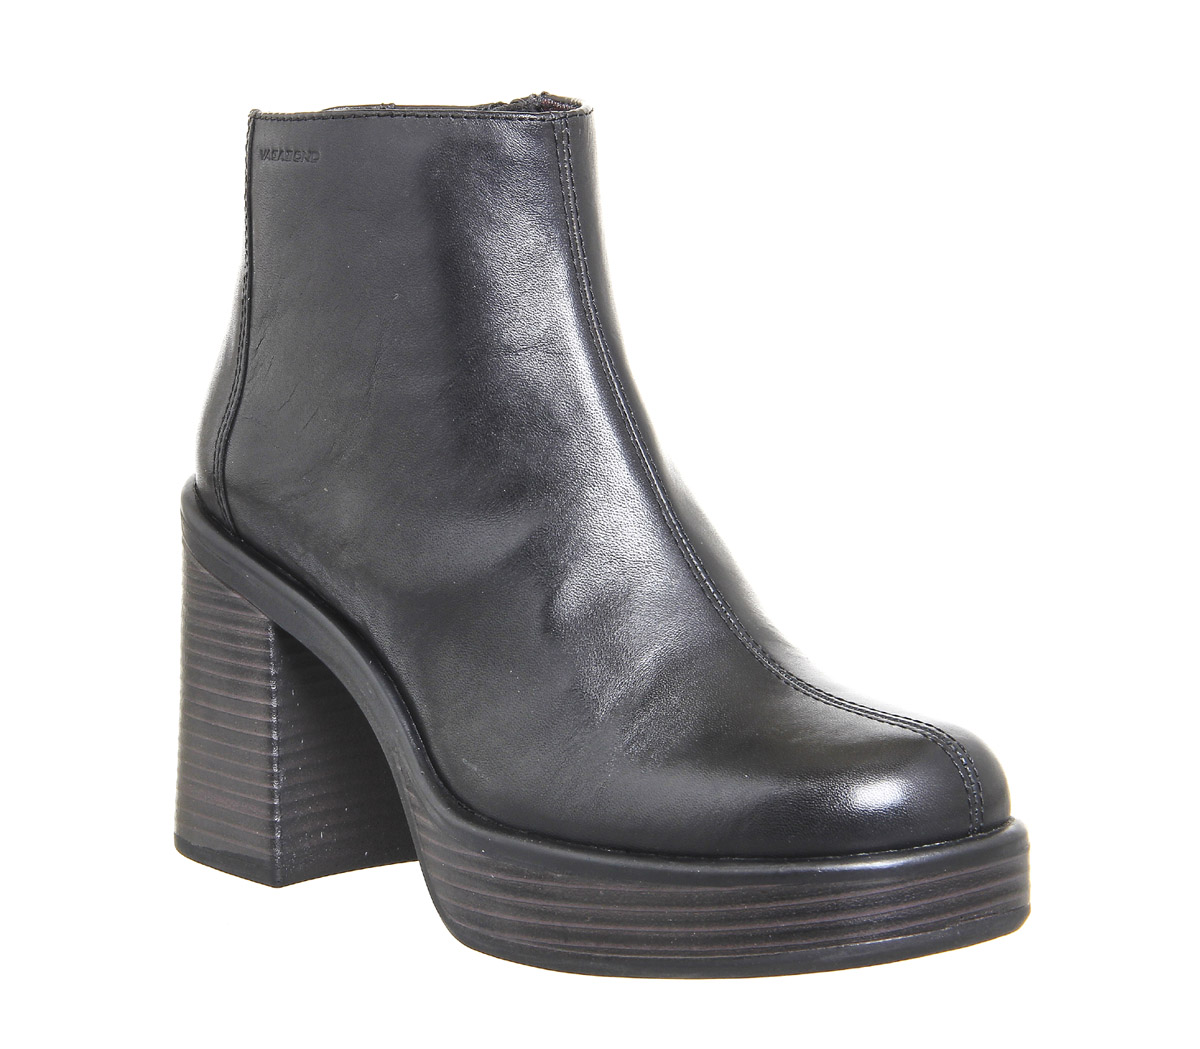 Vagabond ShoemakersTyra Ankle BootsBlack Leather